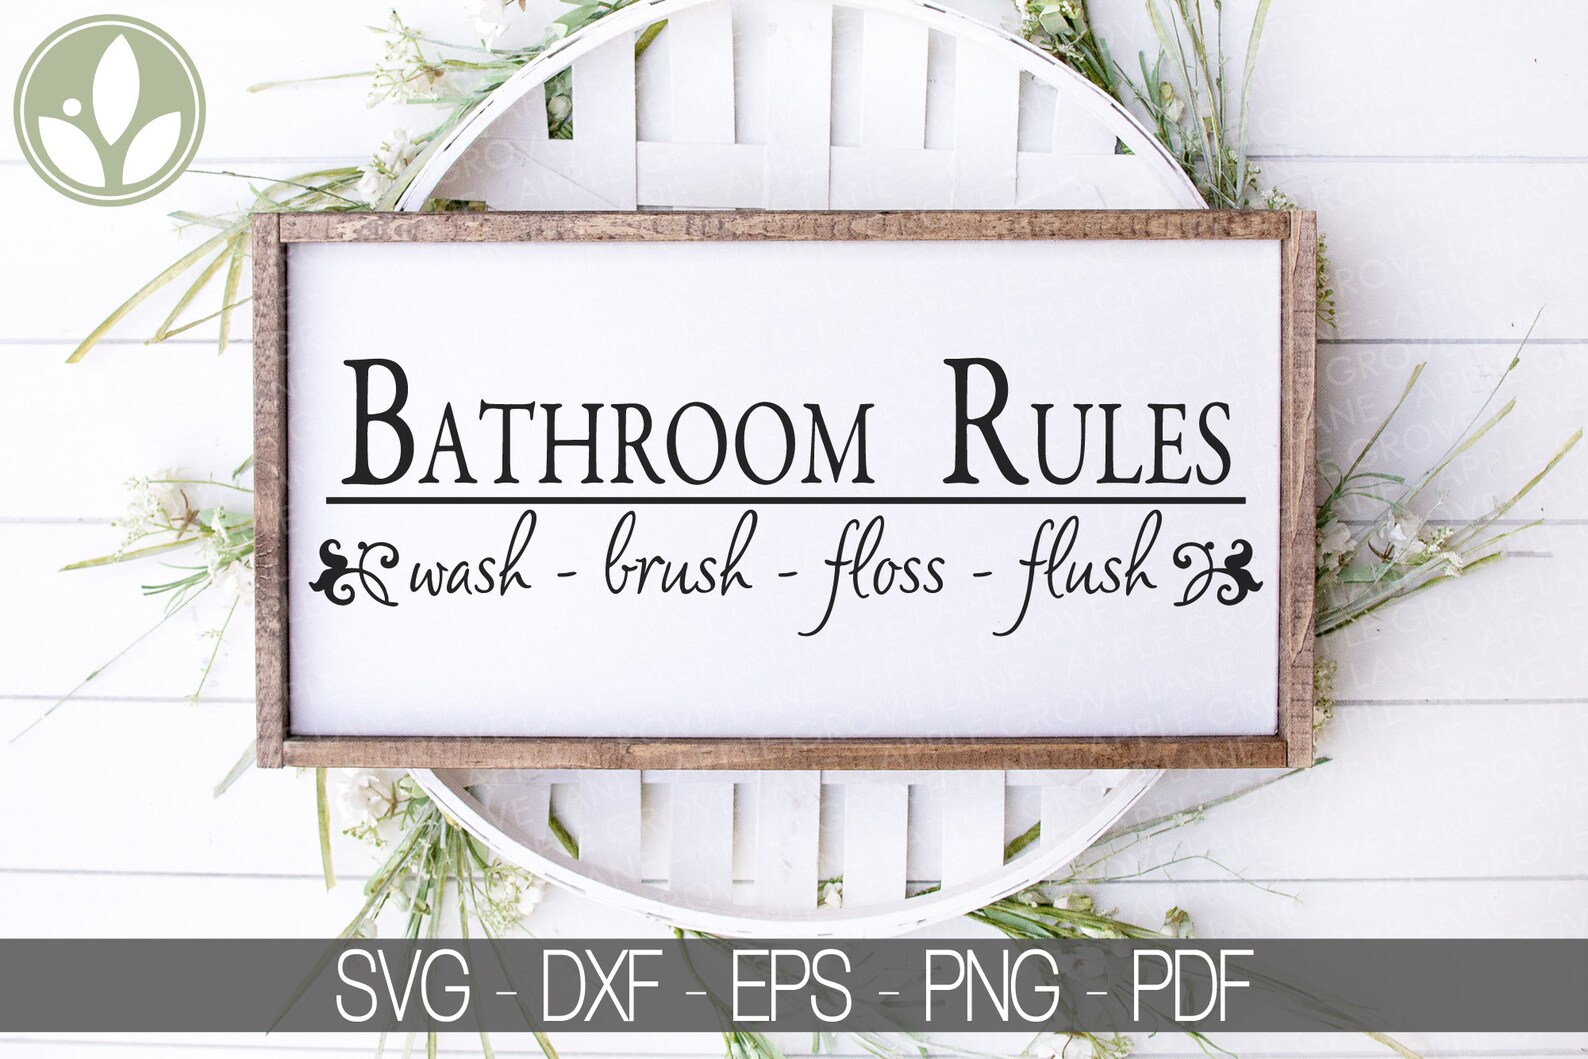 Bathroom Rules Svg Bathroom Svg Wash Brush Floss Flush Svg Etsy 